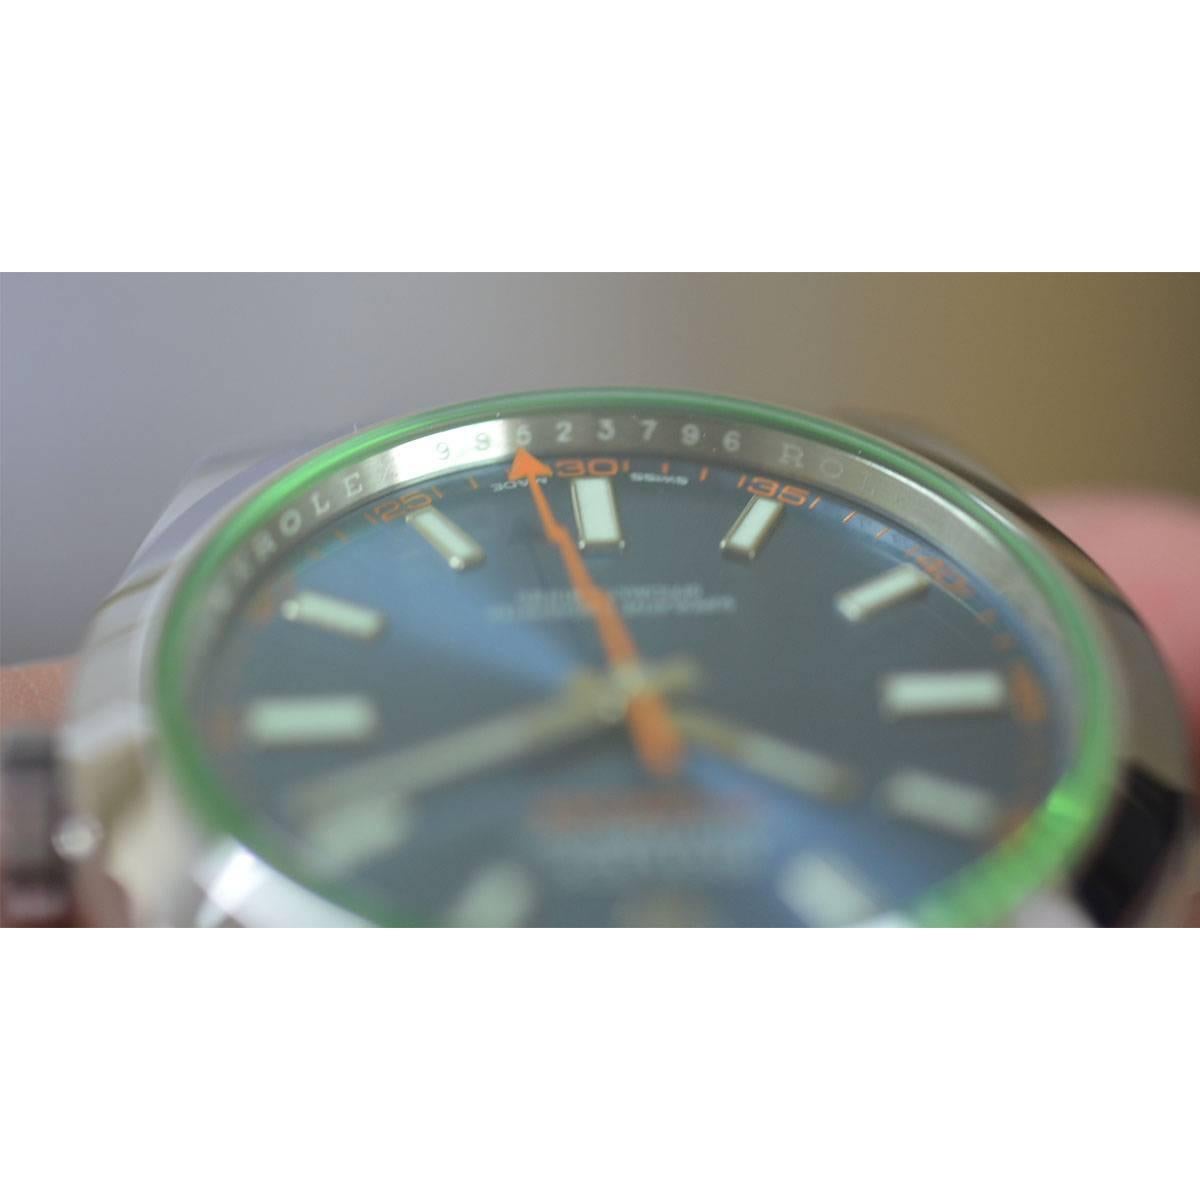 Rolex 116400 Milgauss Blue Stainless Steel Automatic Watch 6